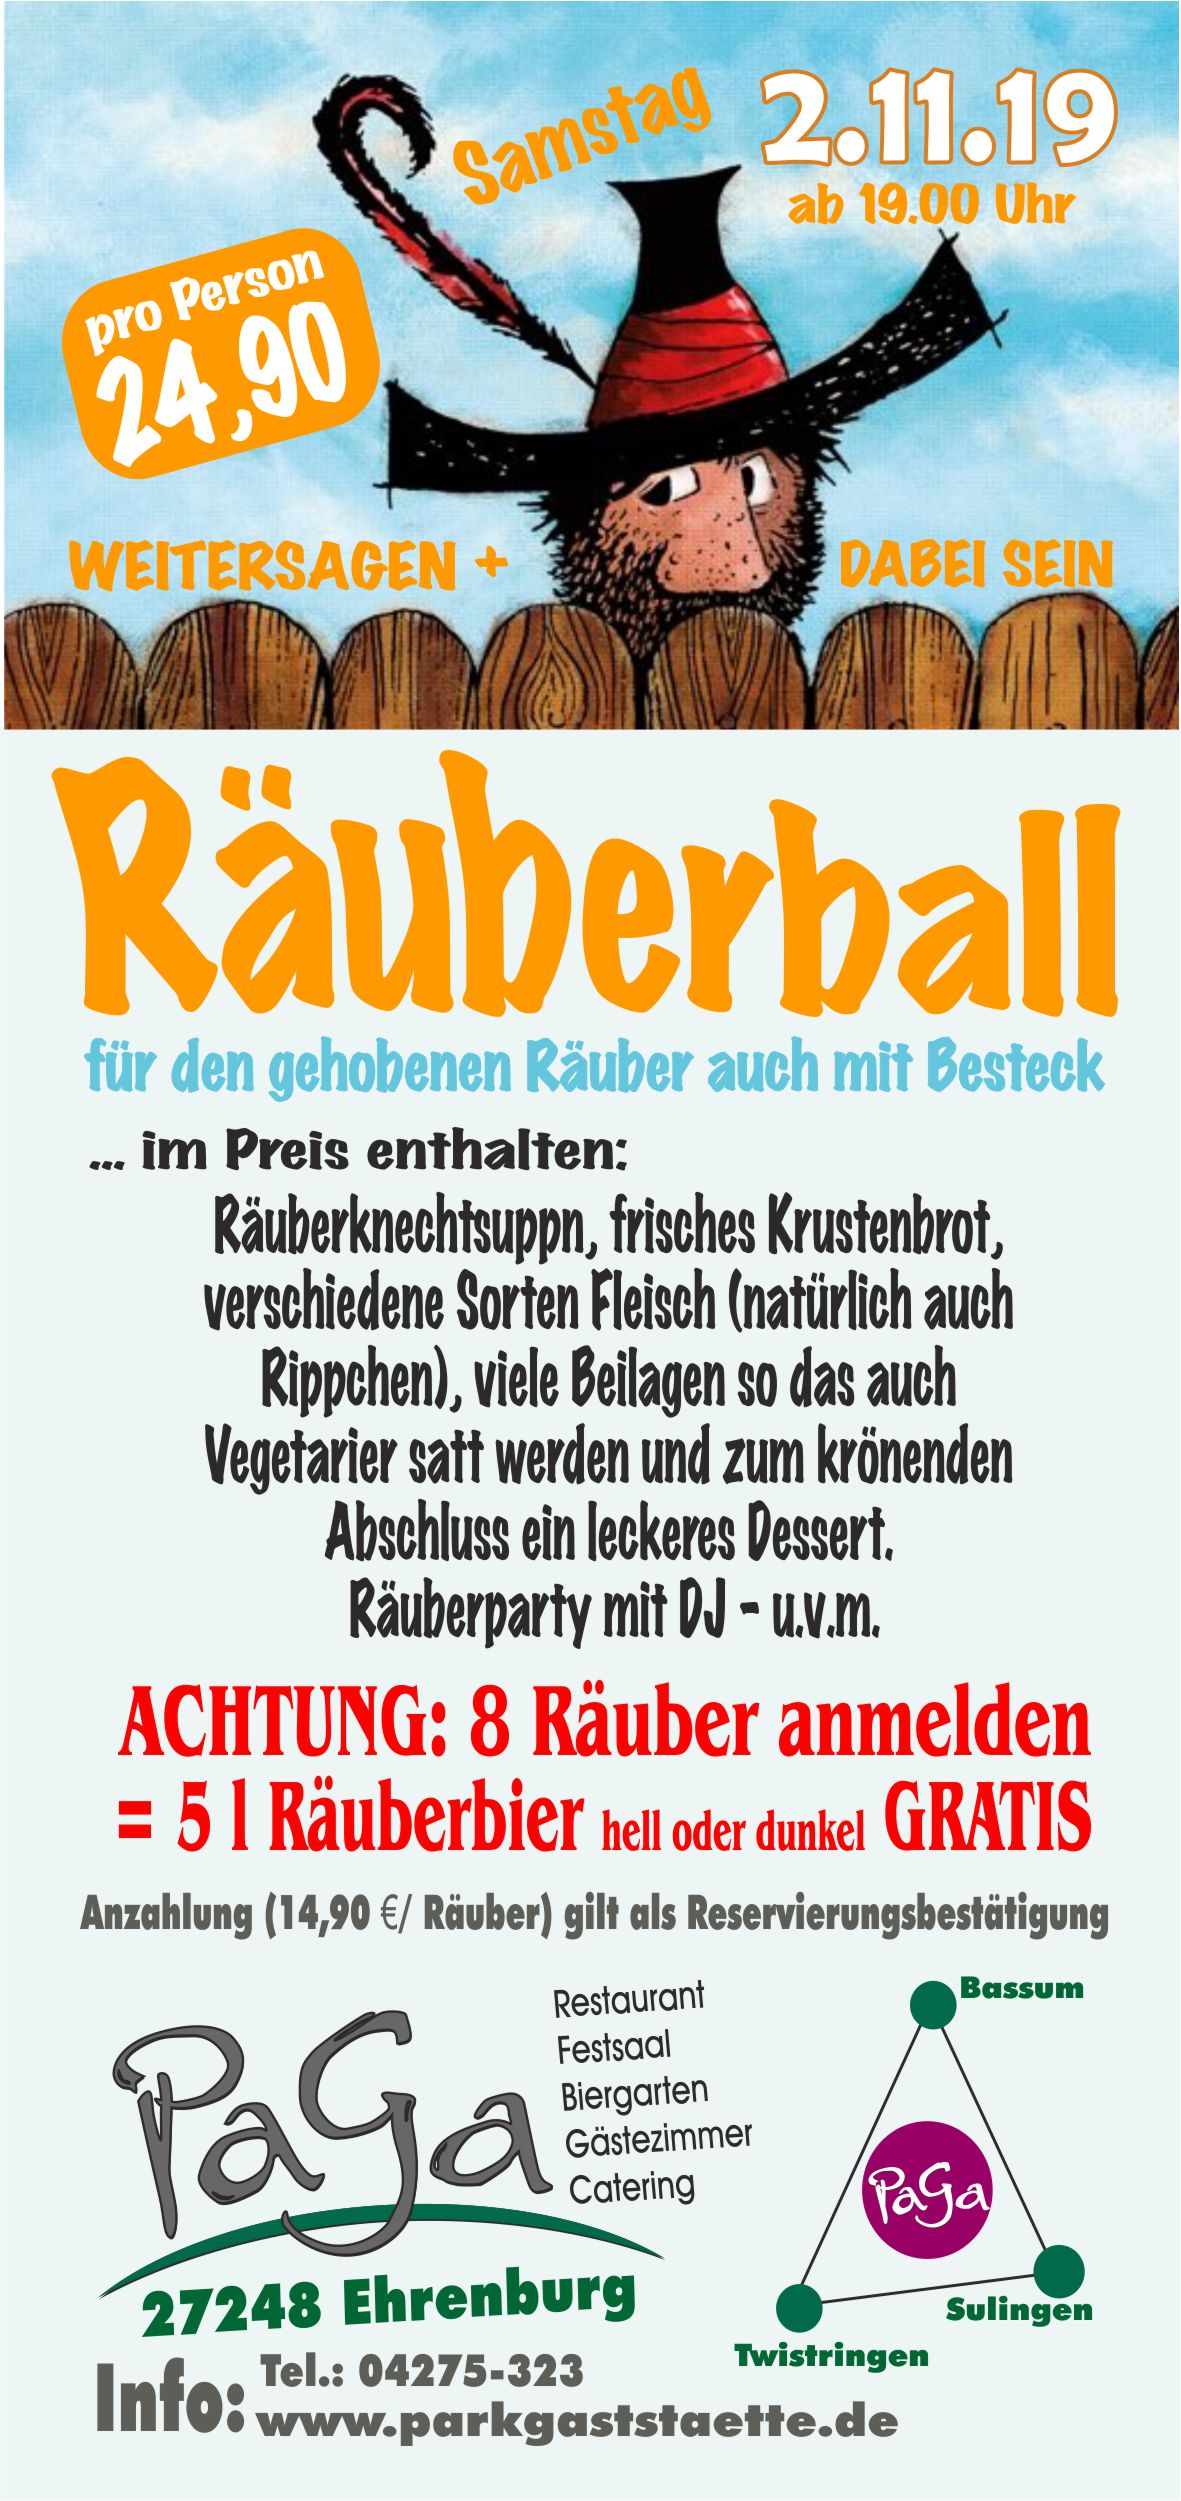 PaGa: Parkgaststätte: Räuberball 2019